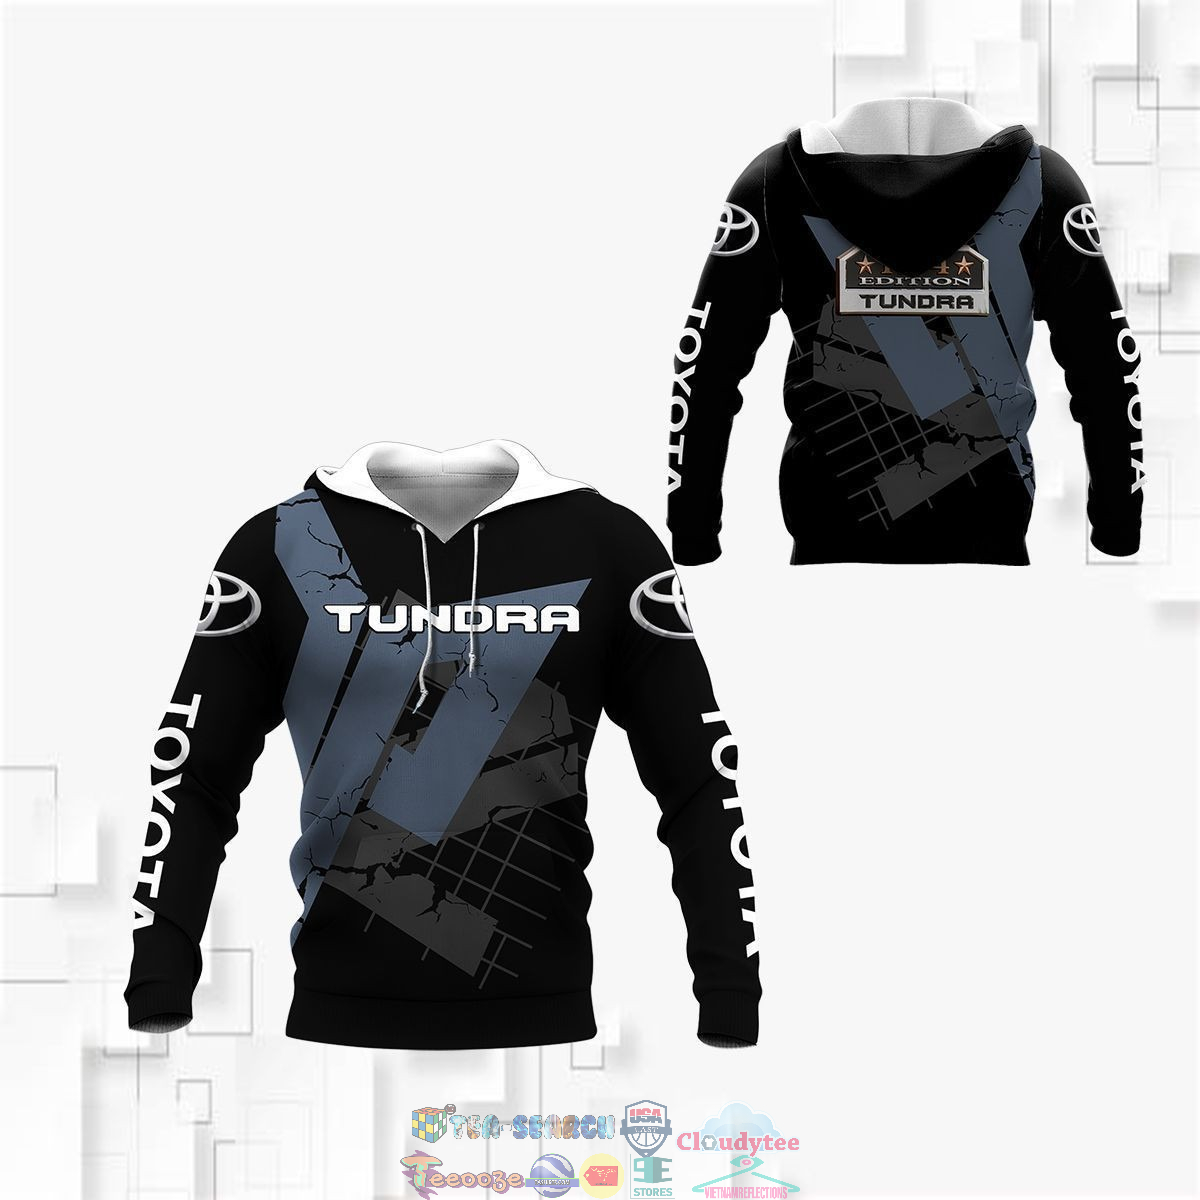 Toyota Tundra ver 2 3D hoodie and t-shirt – Saleoff